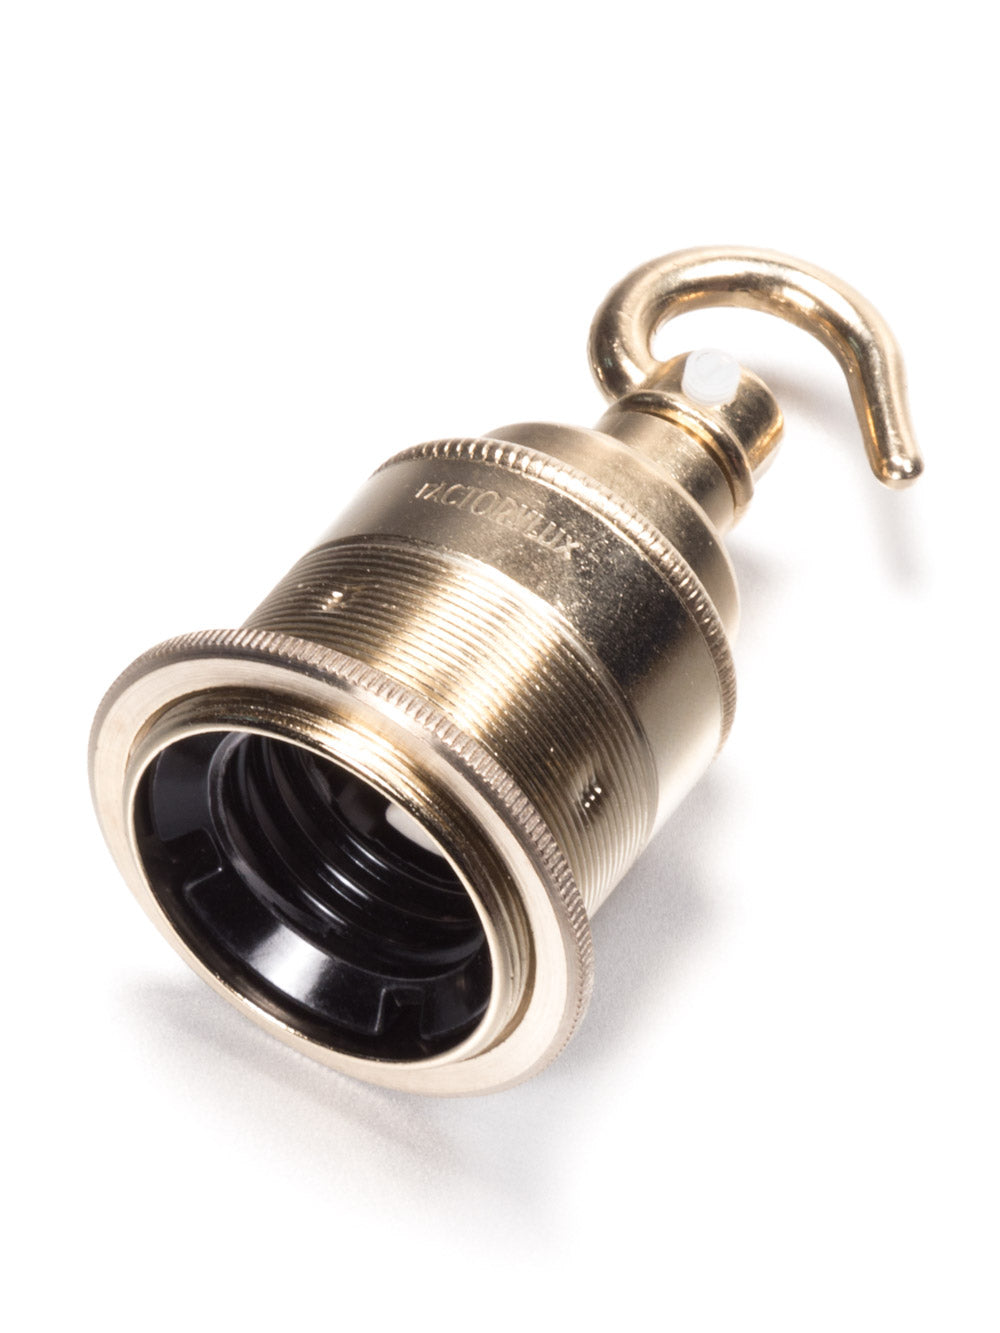 Hooked E27 Lamp Holders | Brass, Bronze